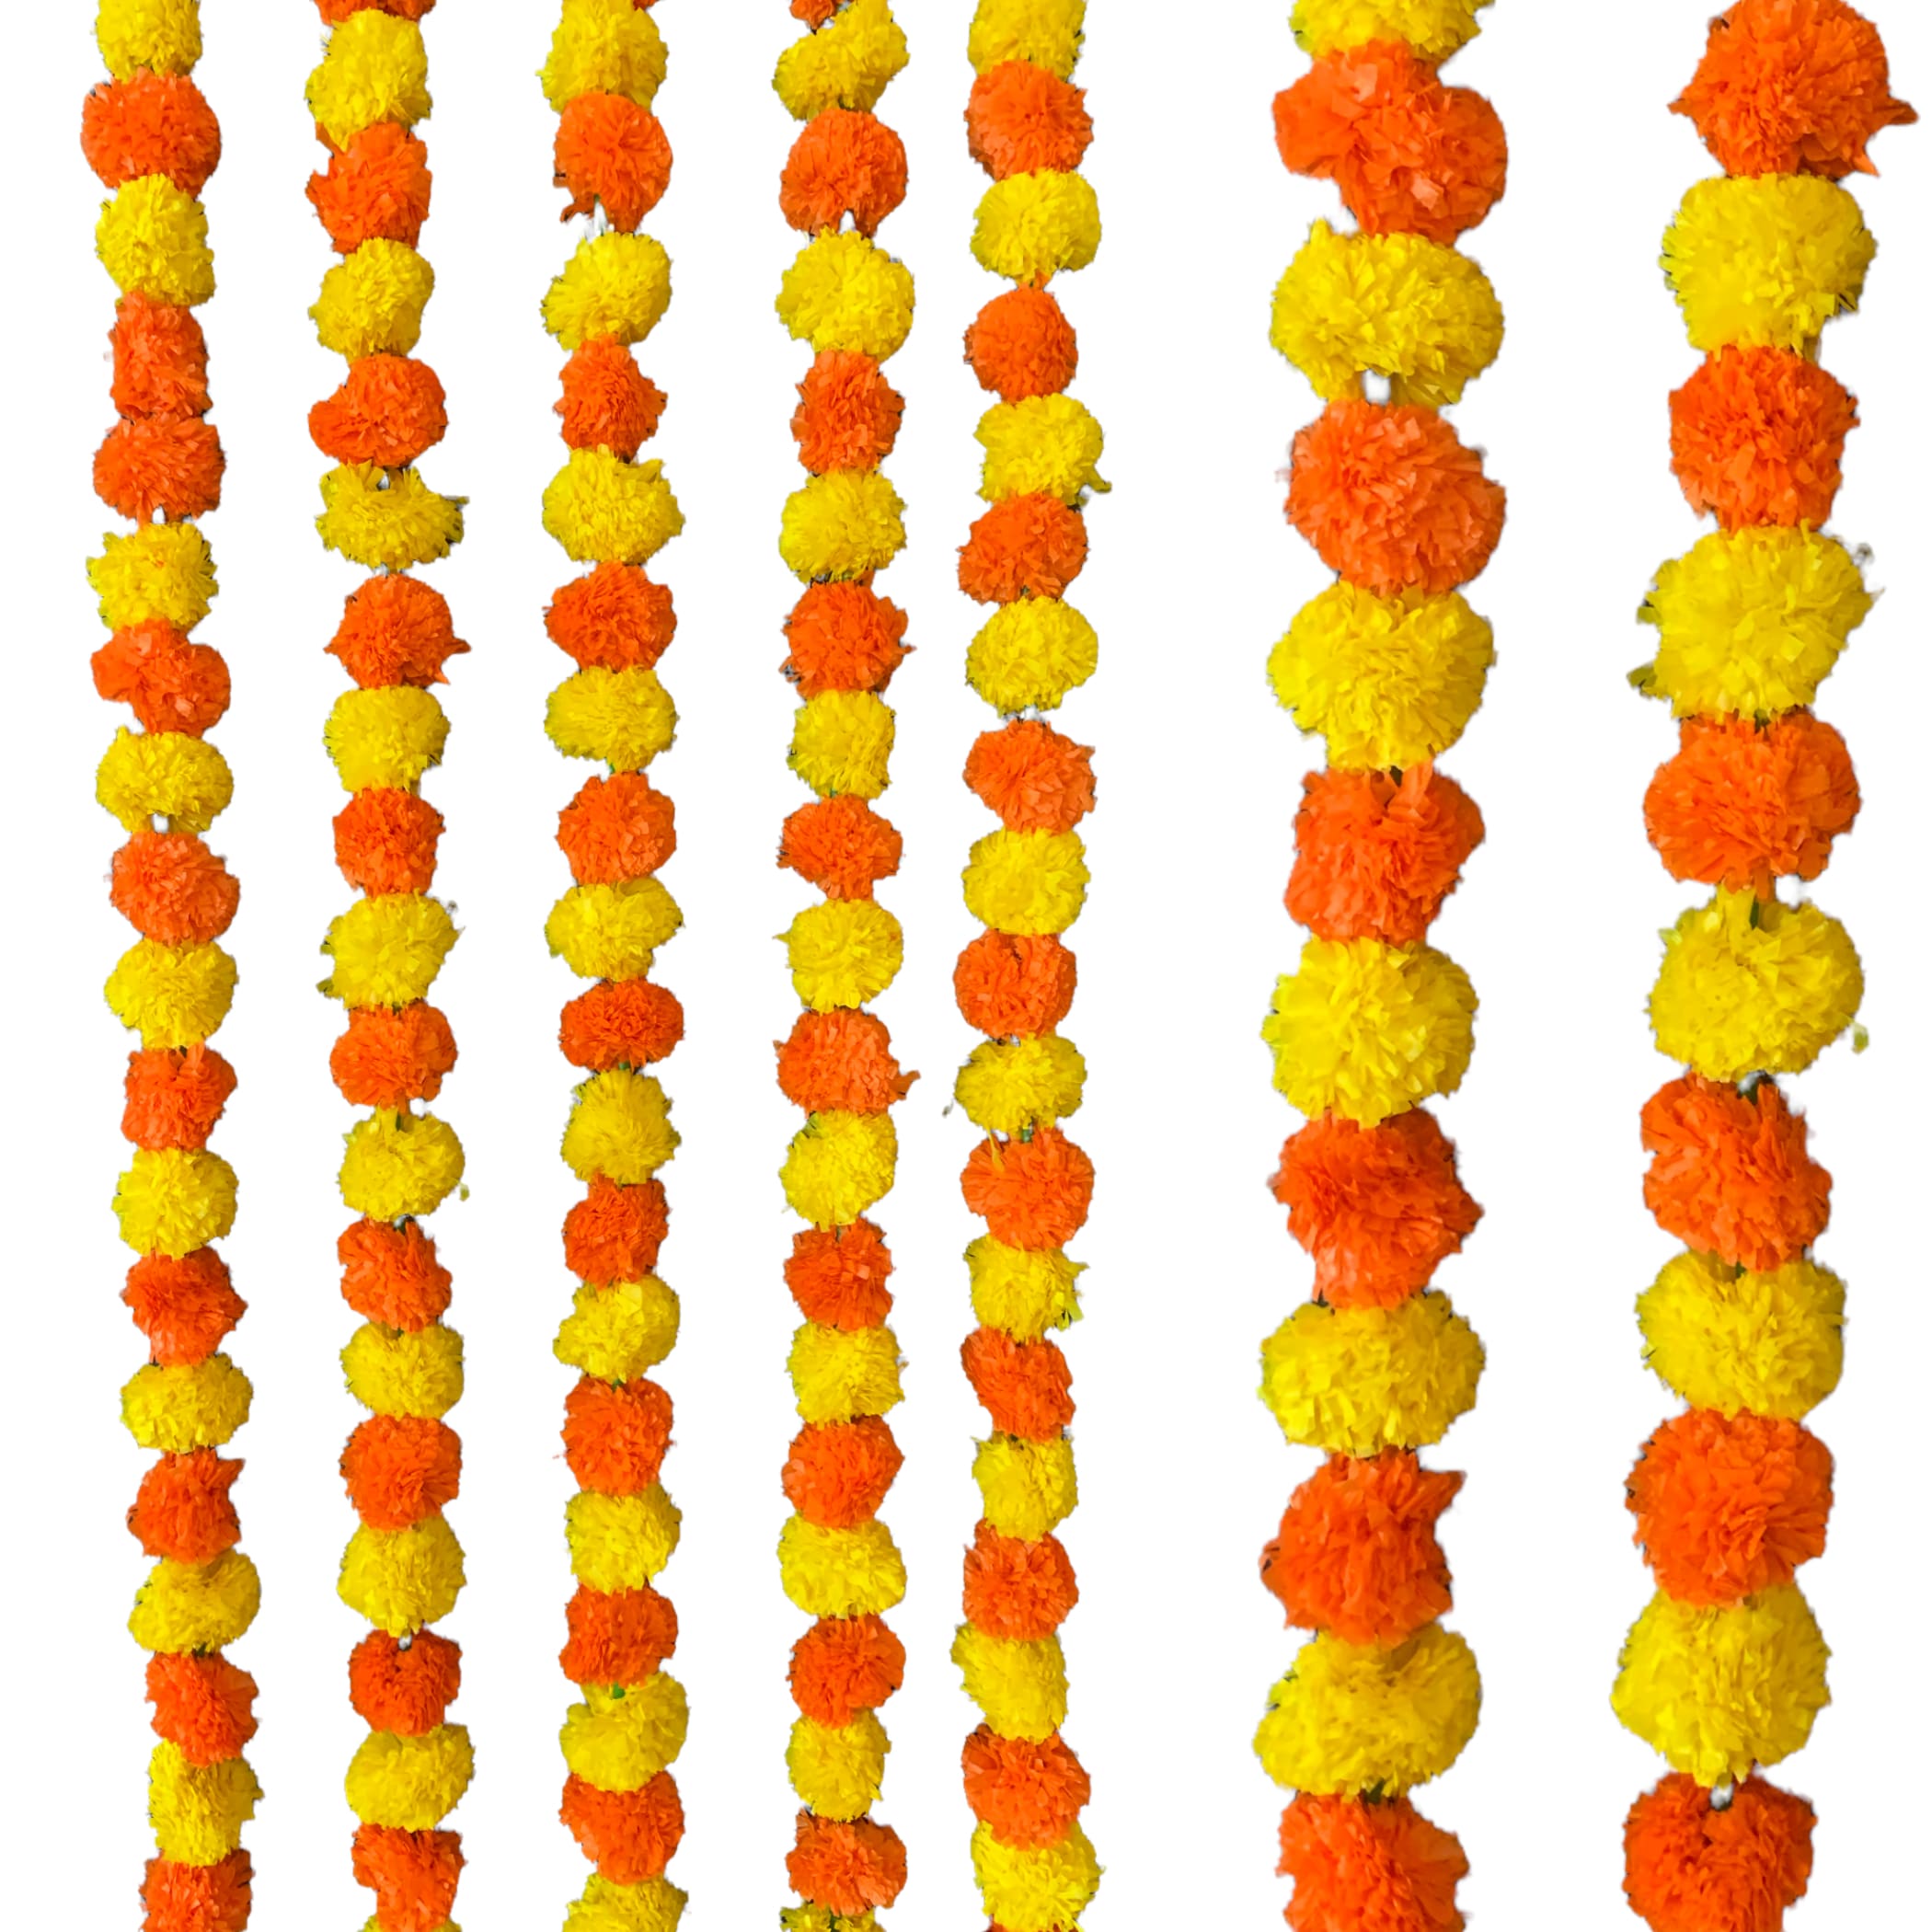 Artificial yellow orange marigold strings diwali decoration